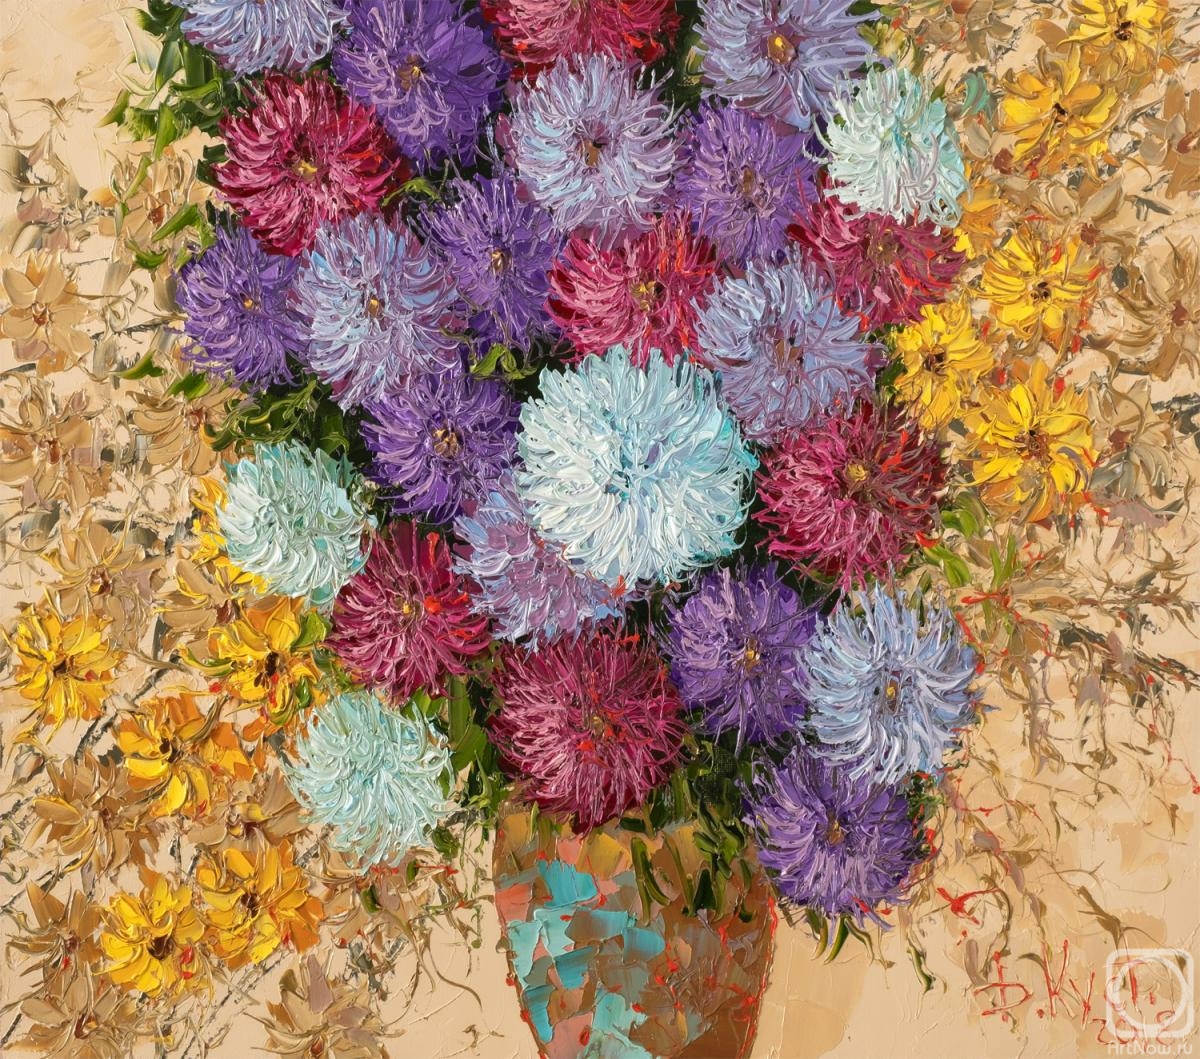 Kustanovich Dmitry. Autumn bouquet